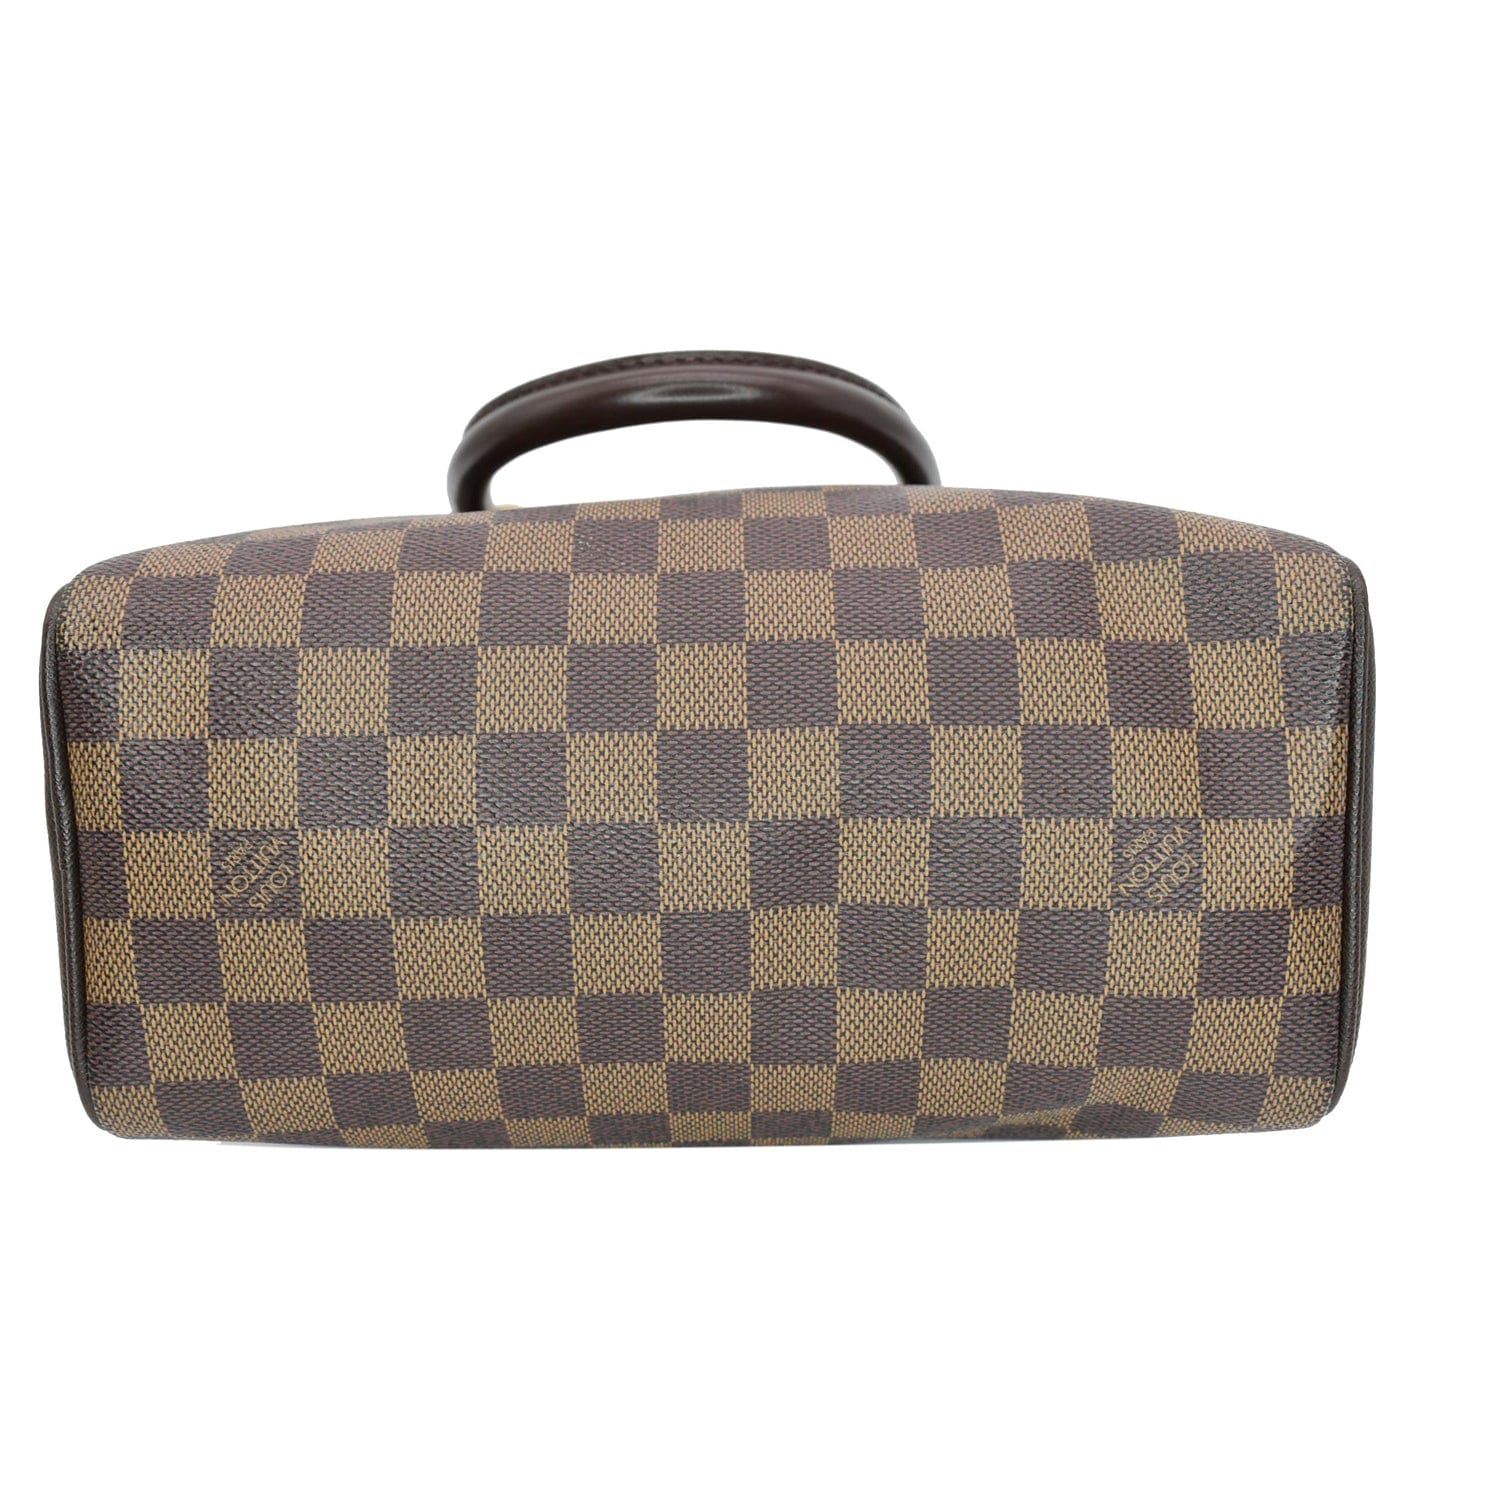 SALE! Today only‼️ Louis Vuitton Brera Damier Ebene Bag, Luxury